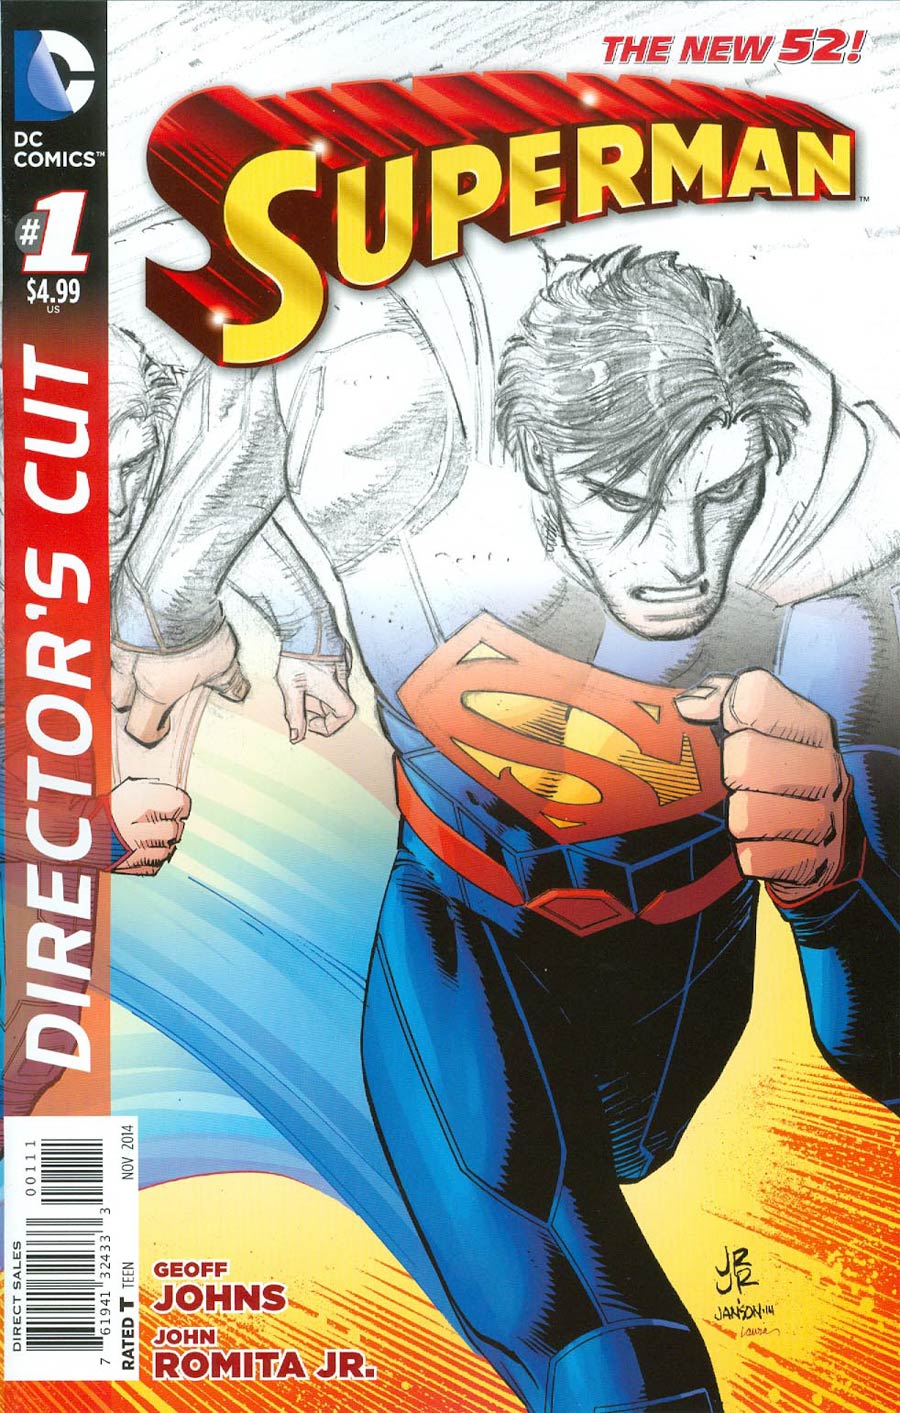 Superman By Geoff Johns & John Romita Jr Directors Cut #1